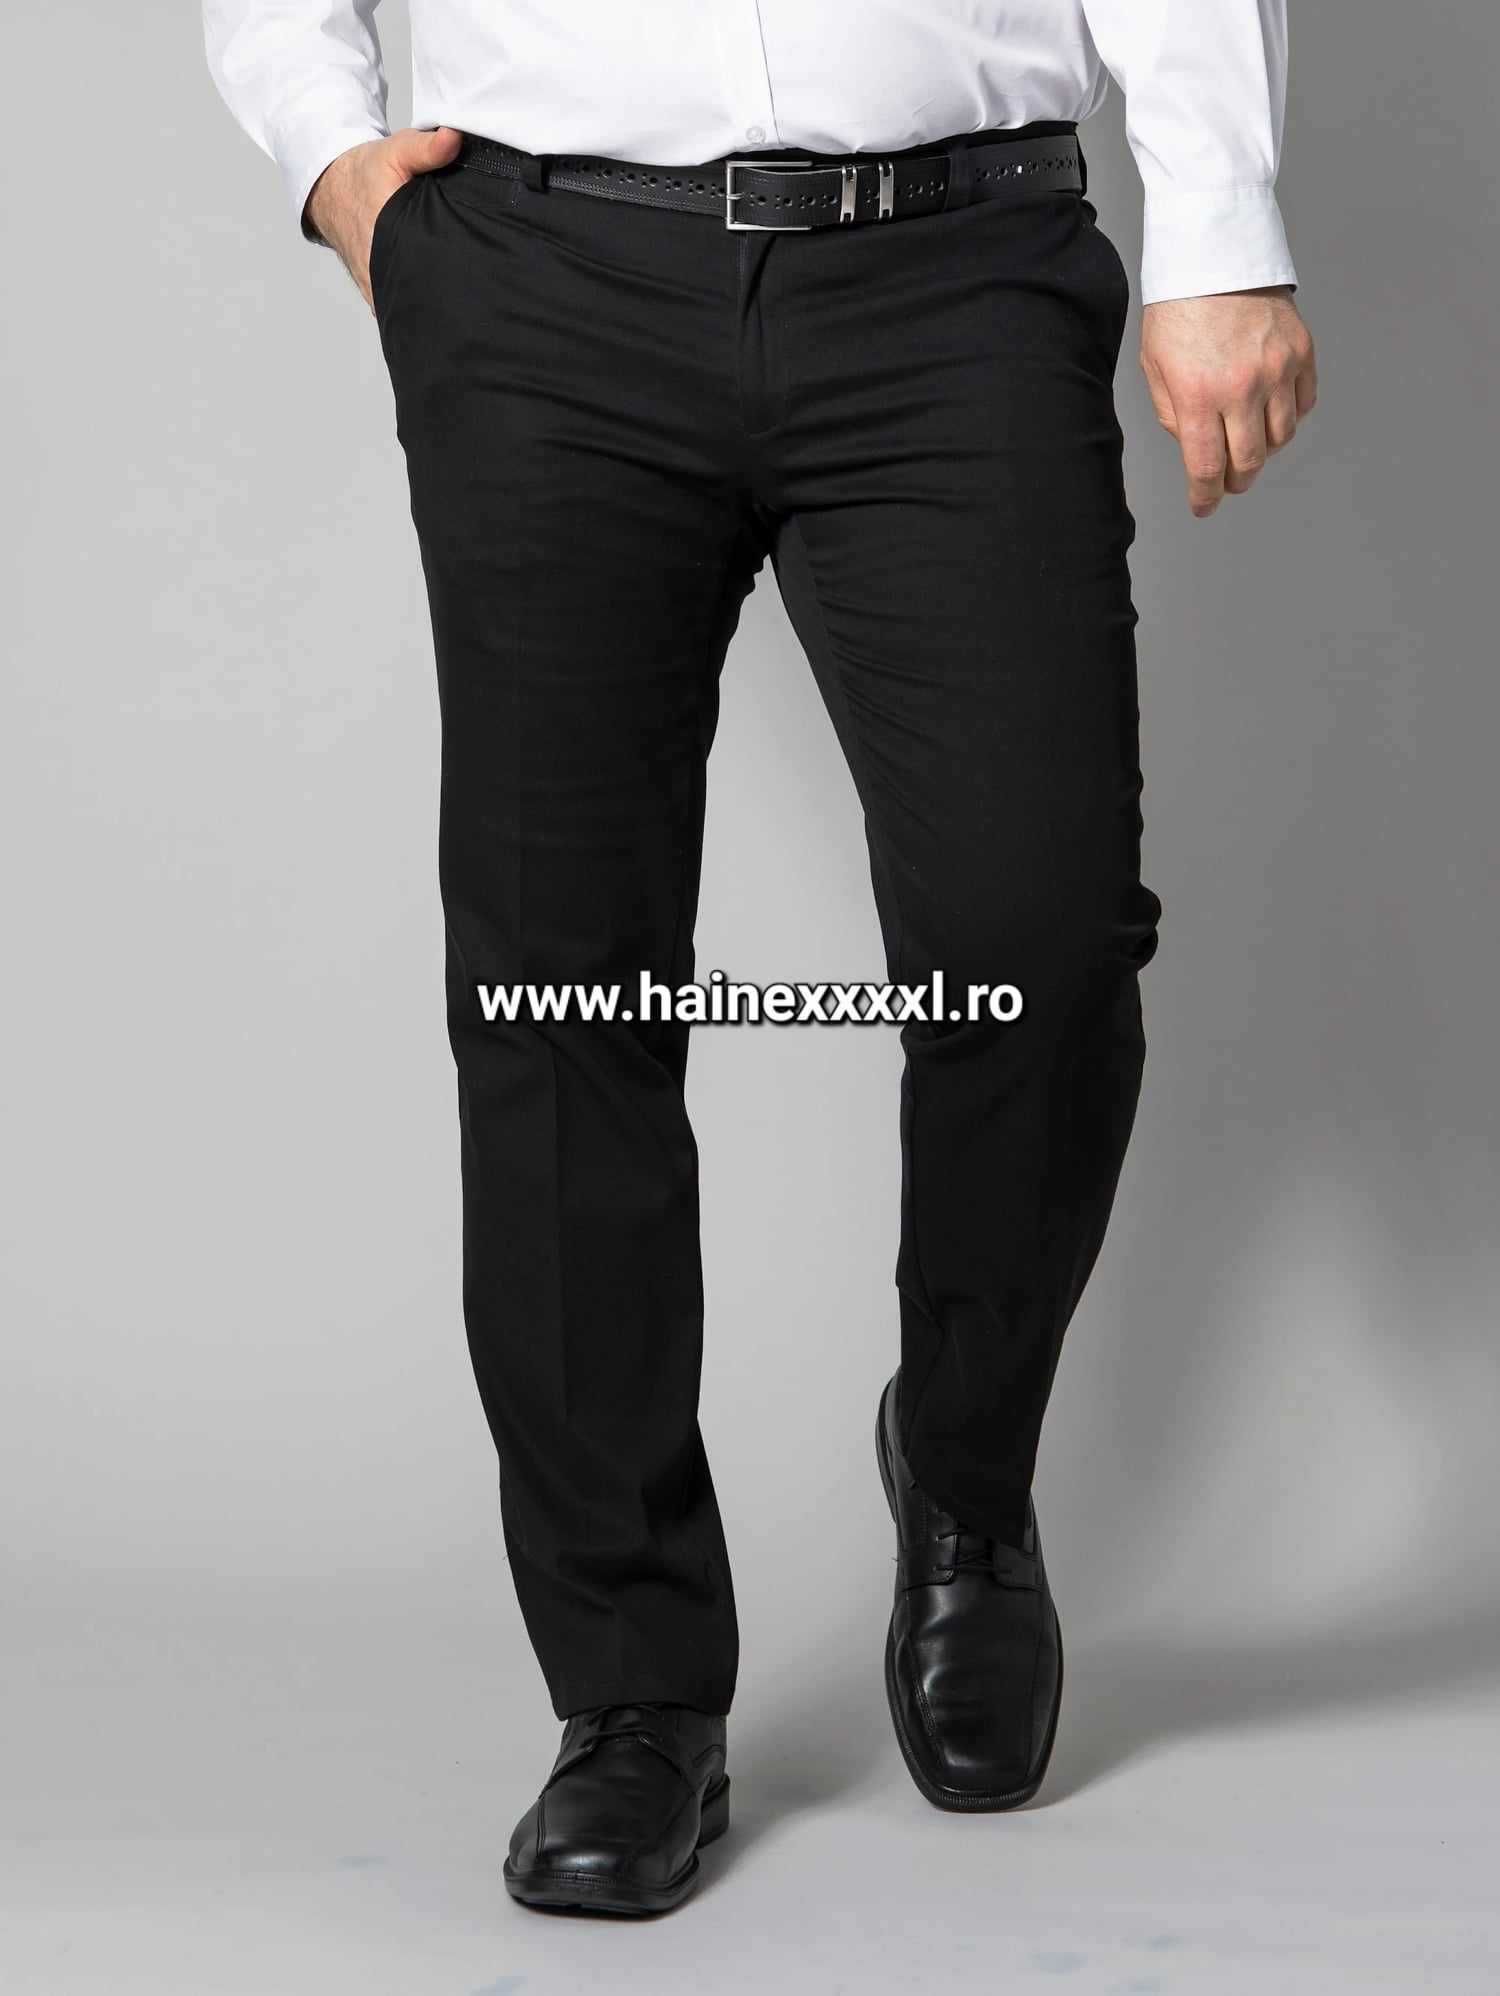 MenPlus Pantaloni croi special cu elastan, talie elastica 170- 190 cm